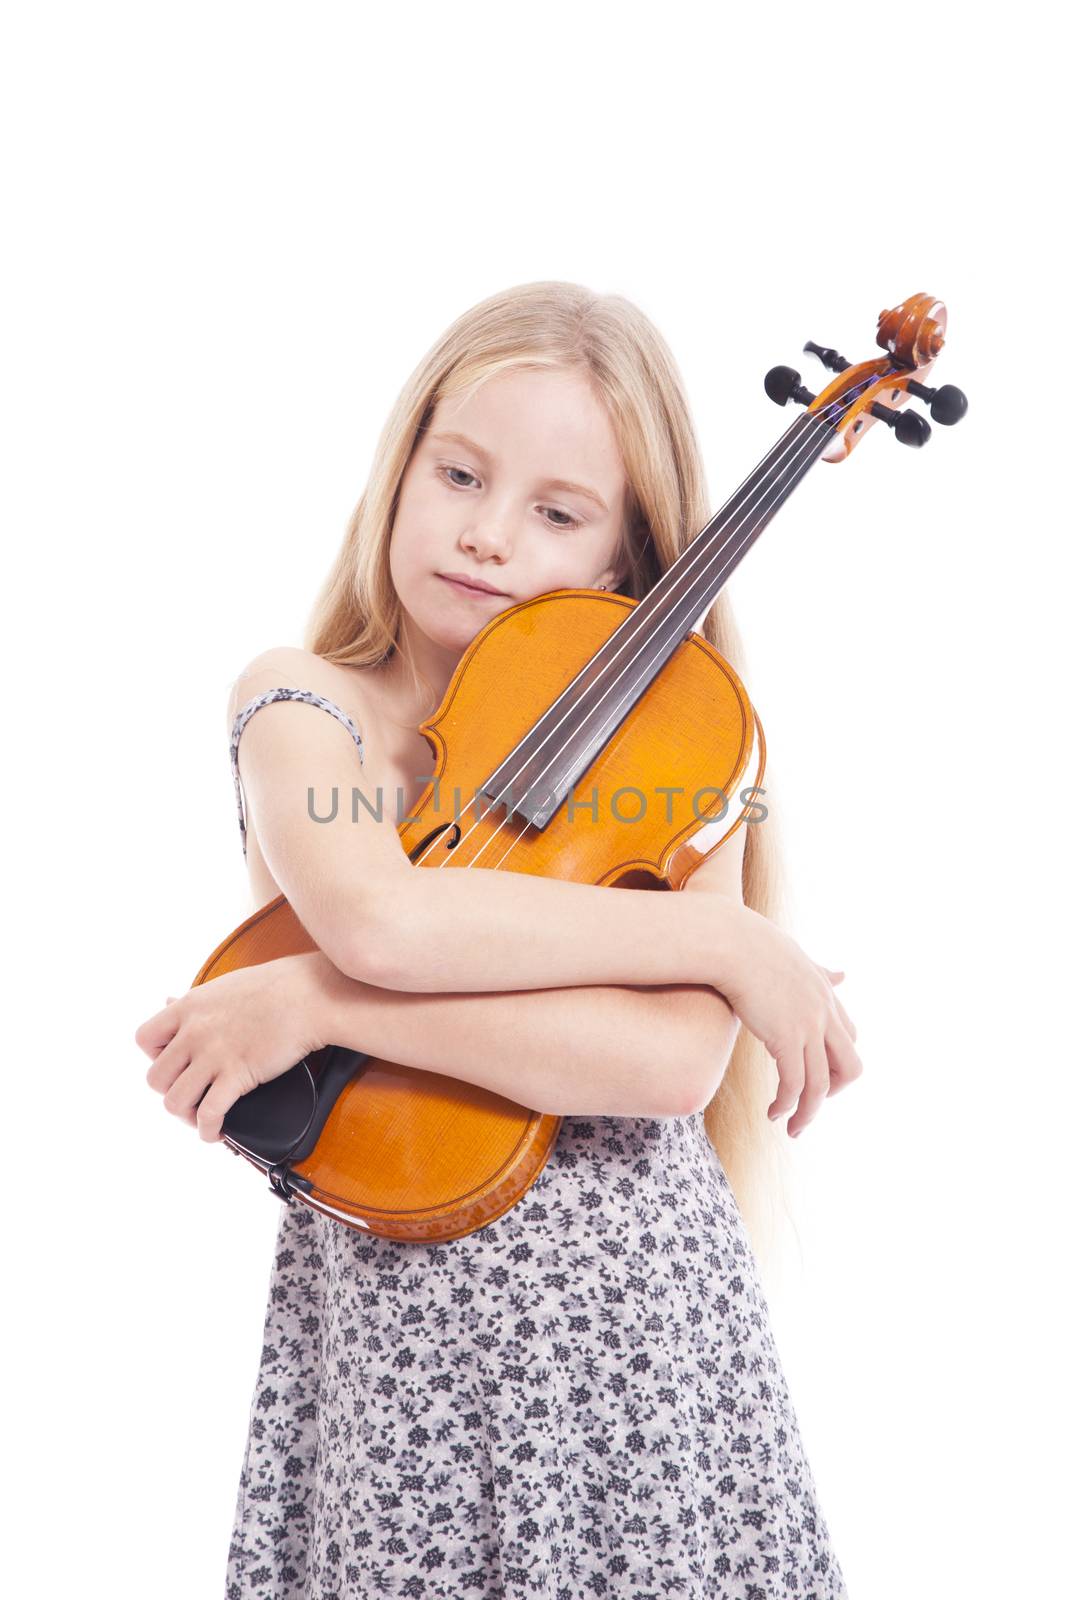 young girl in dress embracing violin by ahavelaar